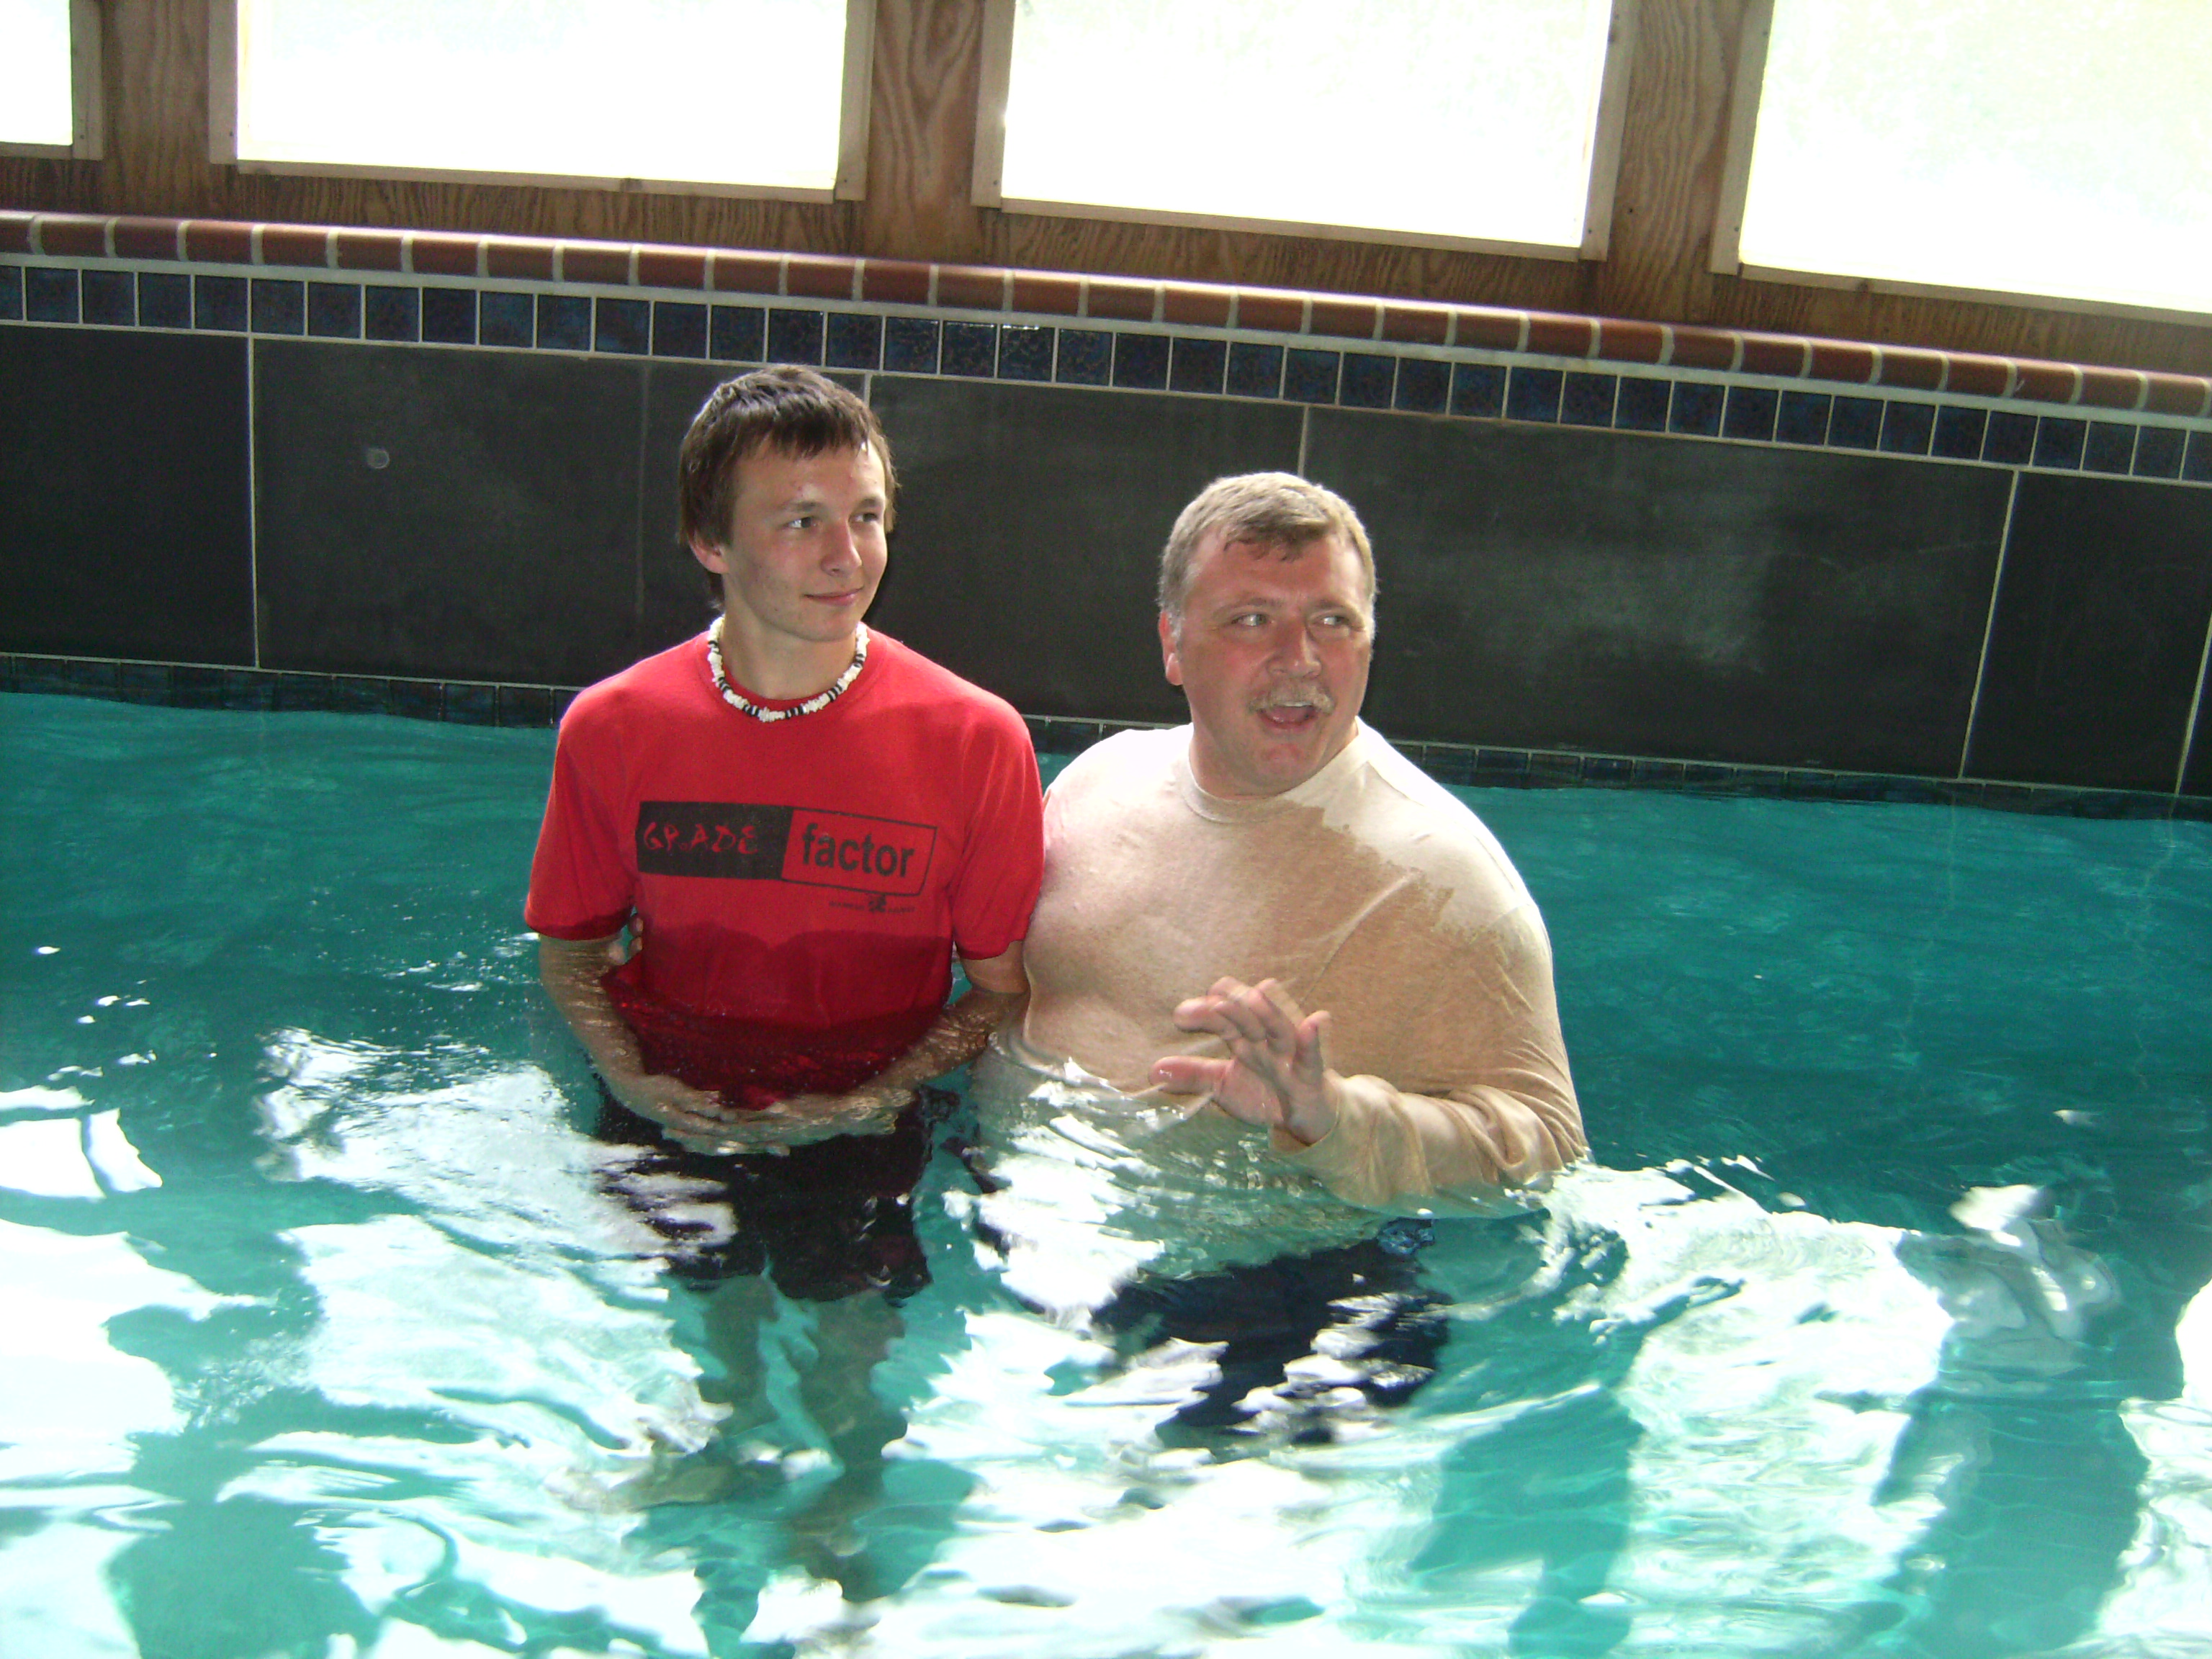 baptismpic09017.jpg